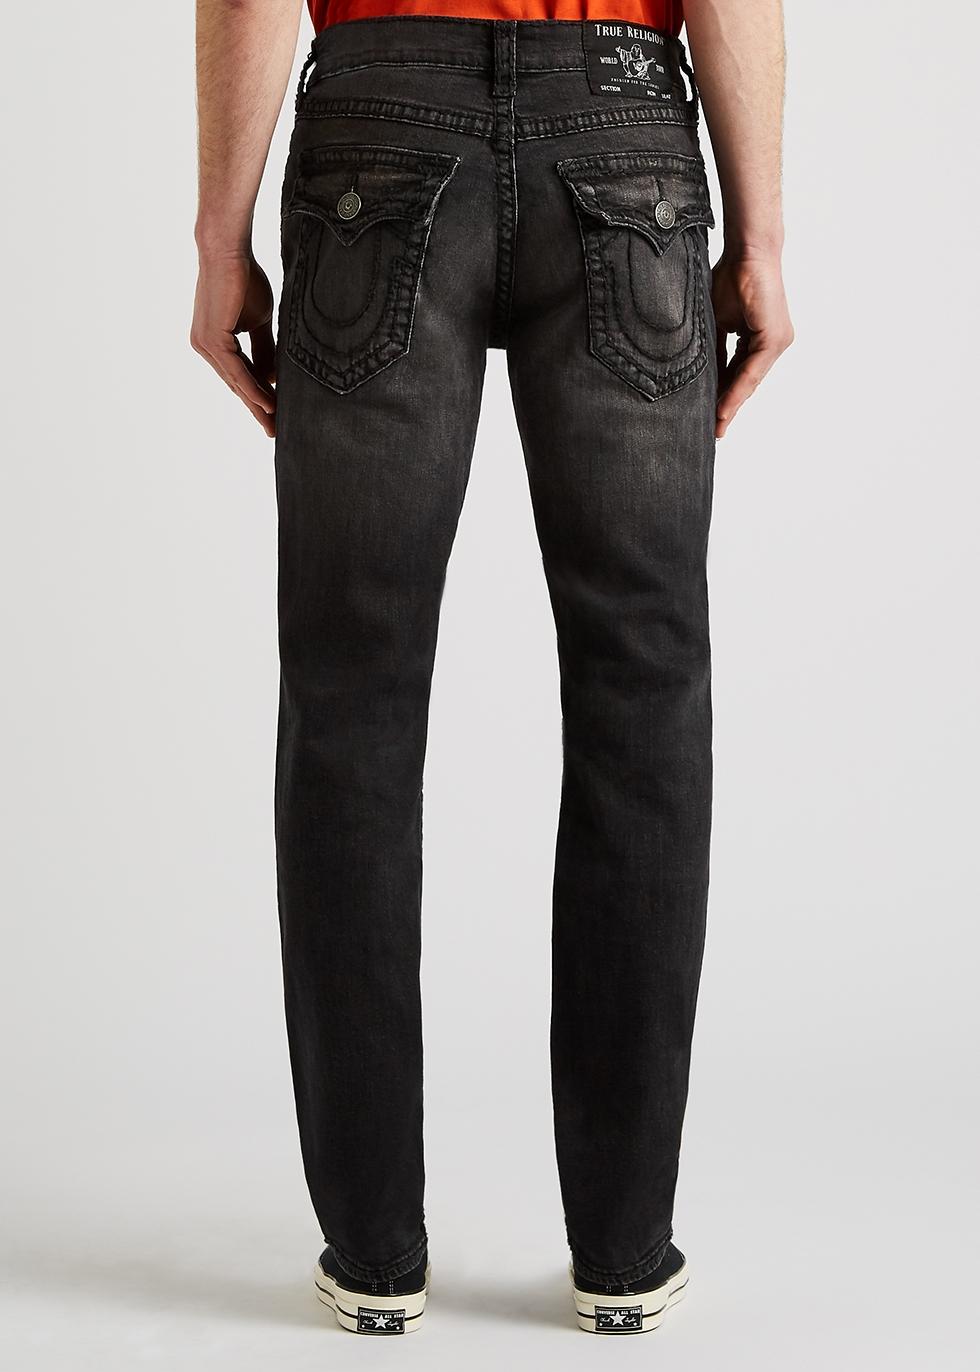 True Religion Denim Geno Dark Grey Slim-leg Jeans in Gray for Men - Lyst